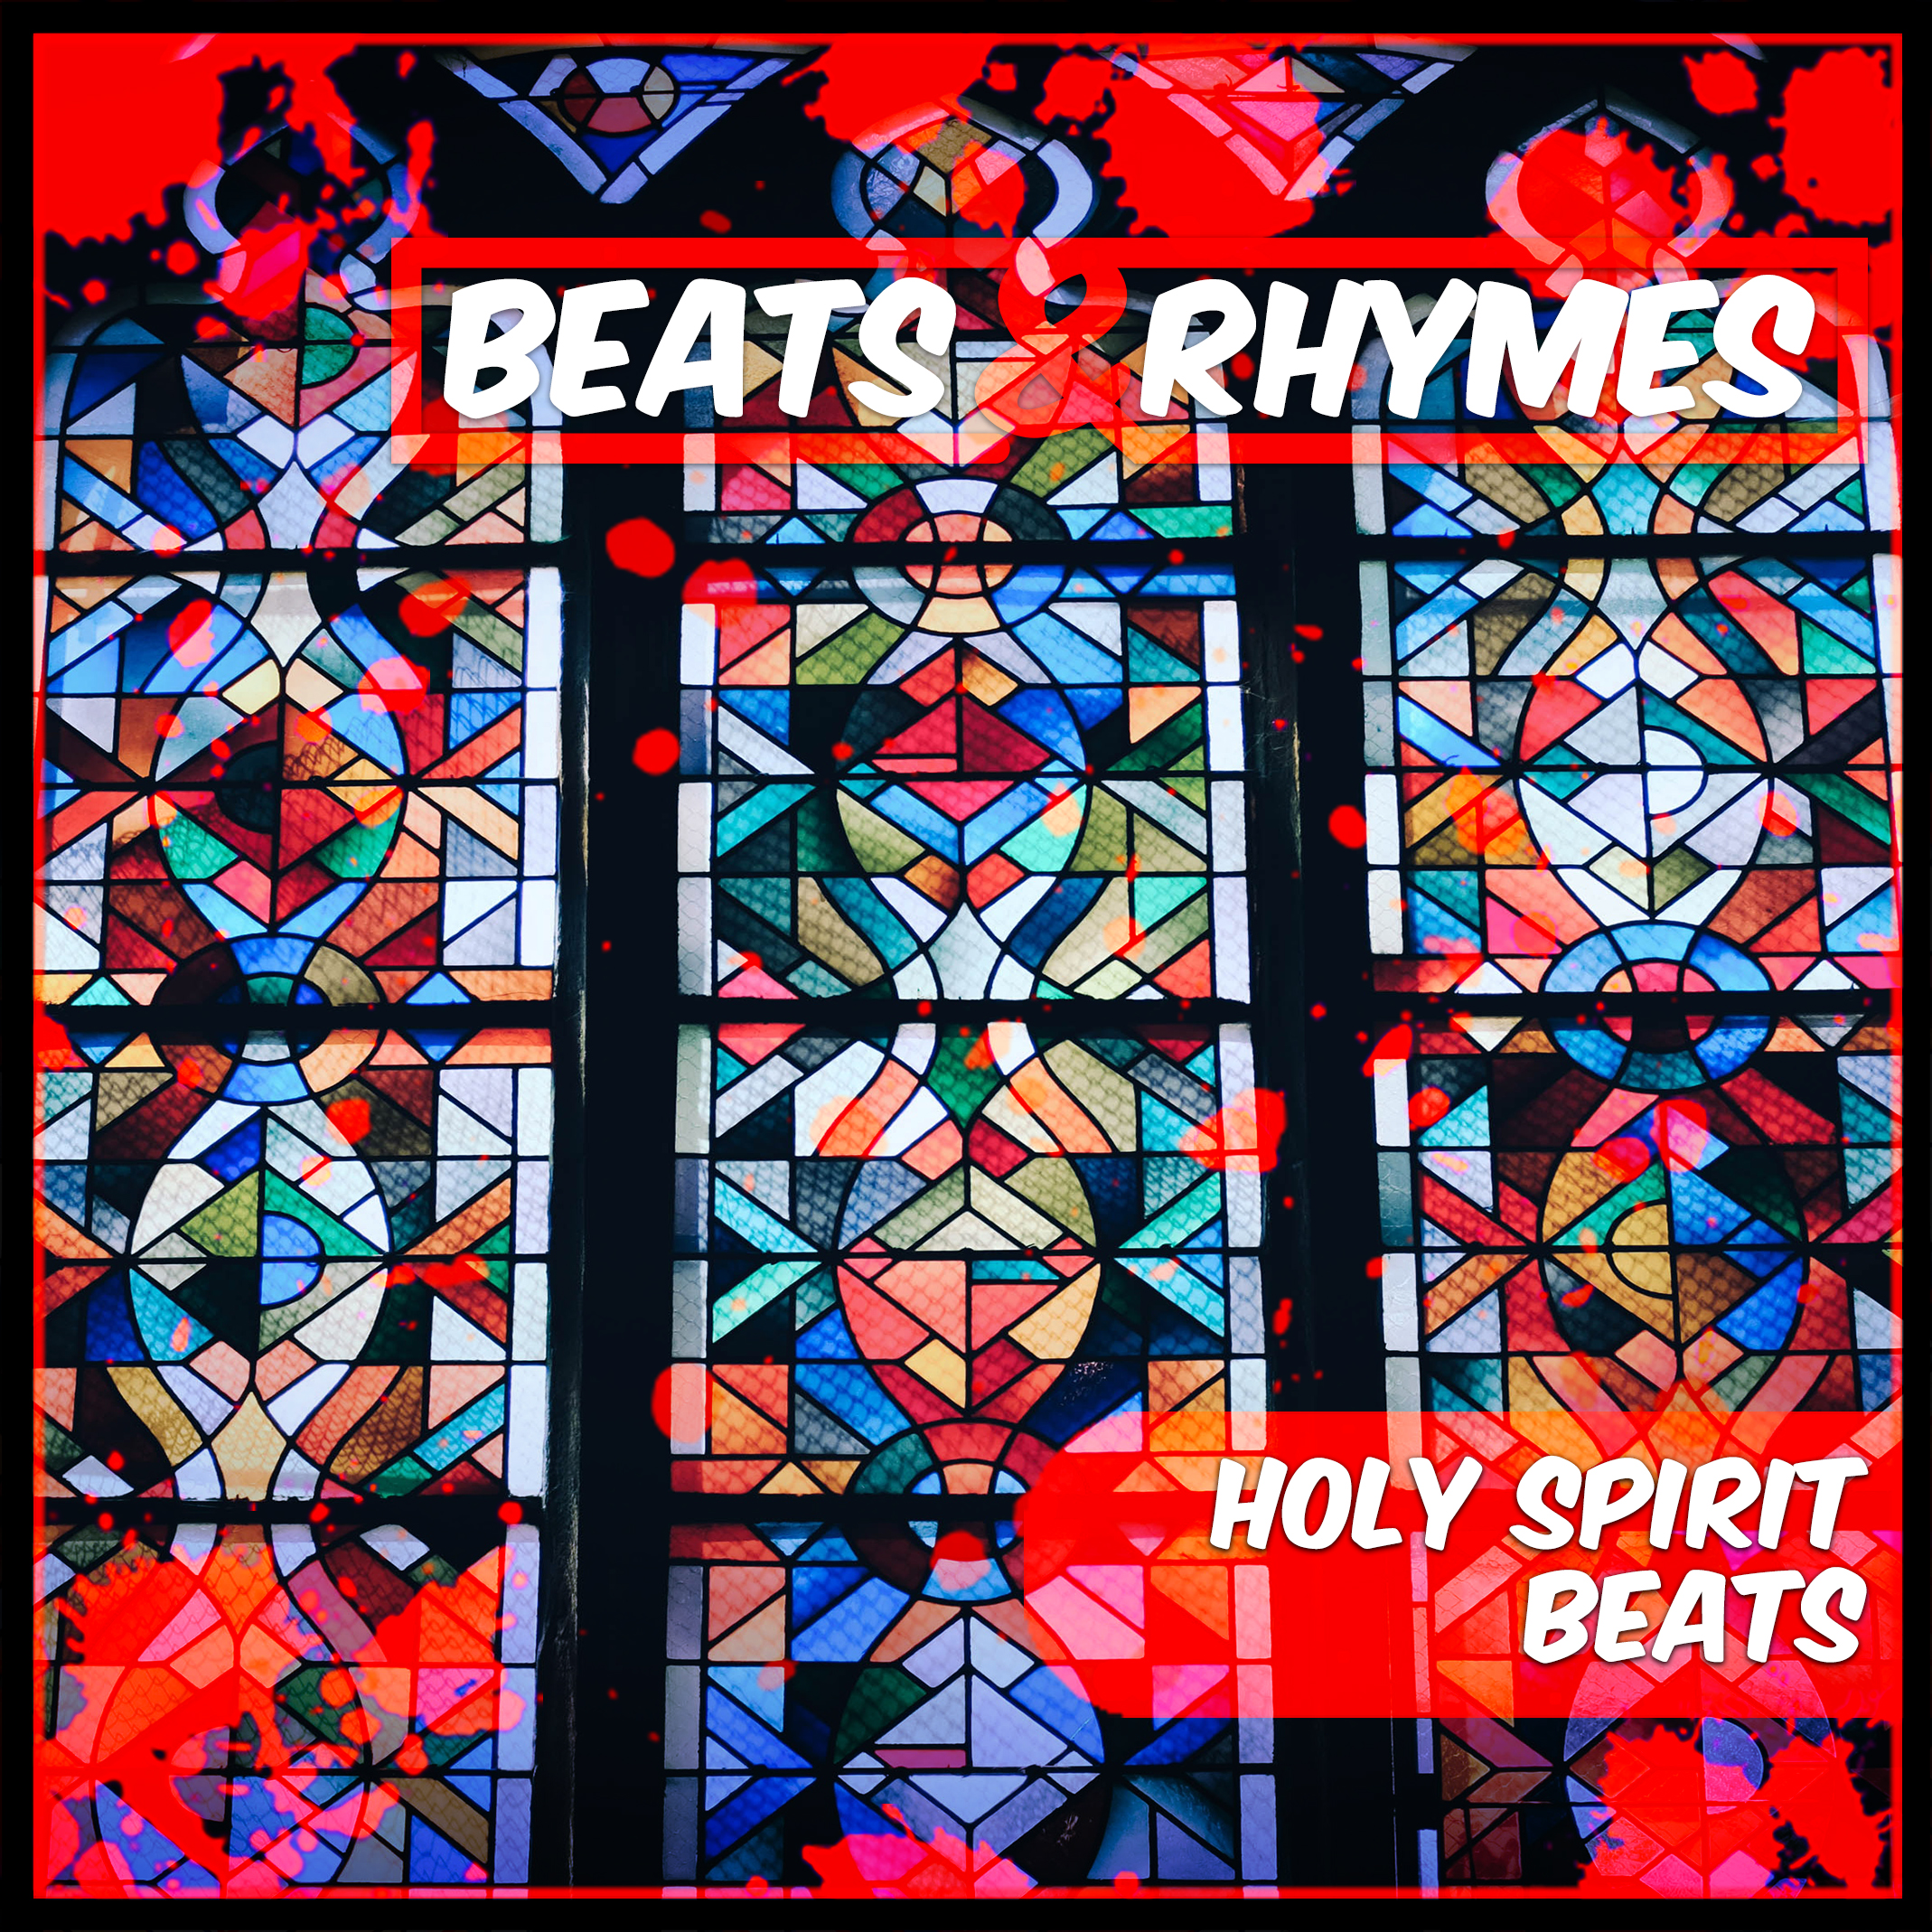 Holy Spirit Beats